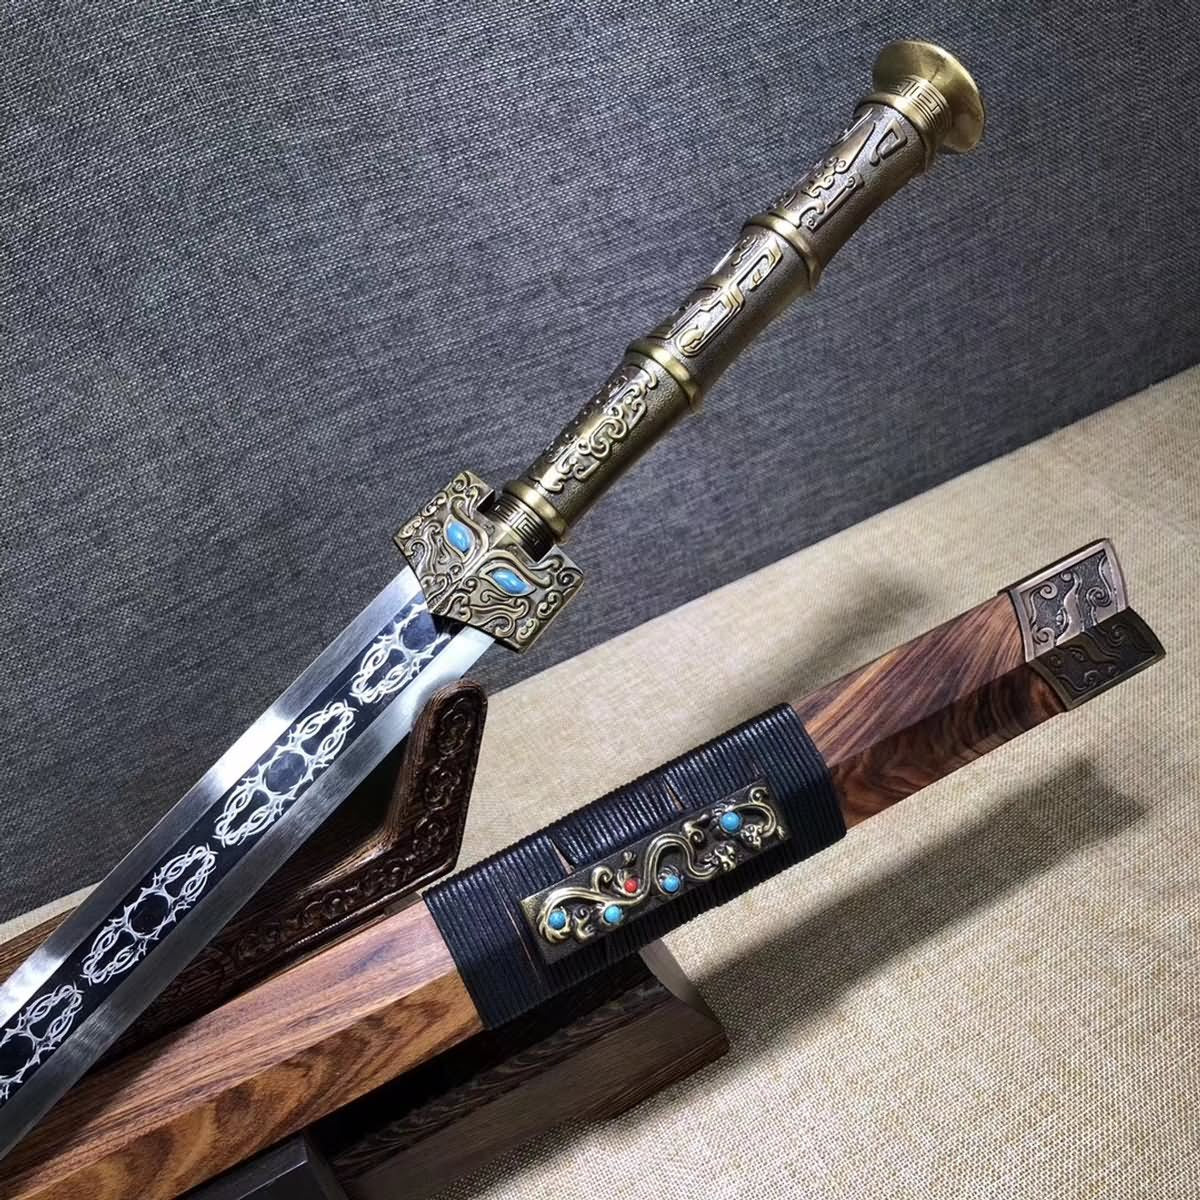 Han jian sword,Handmade high carbon steel blade,Alloy handle - Chinese sword shop